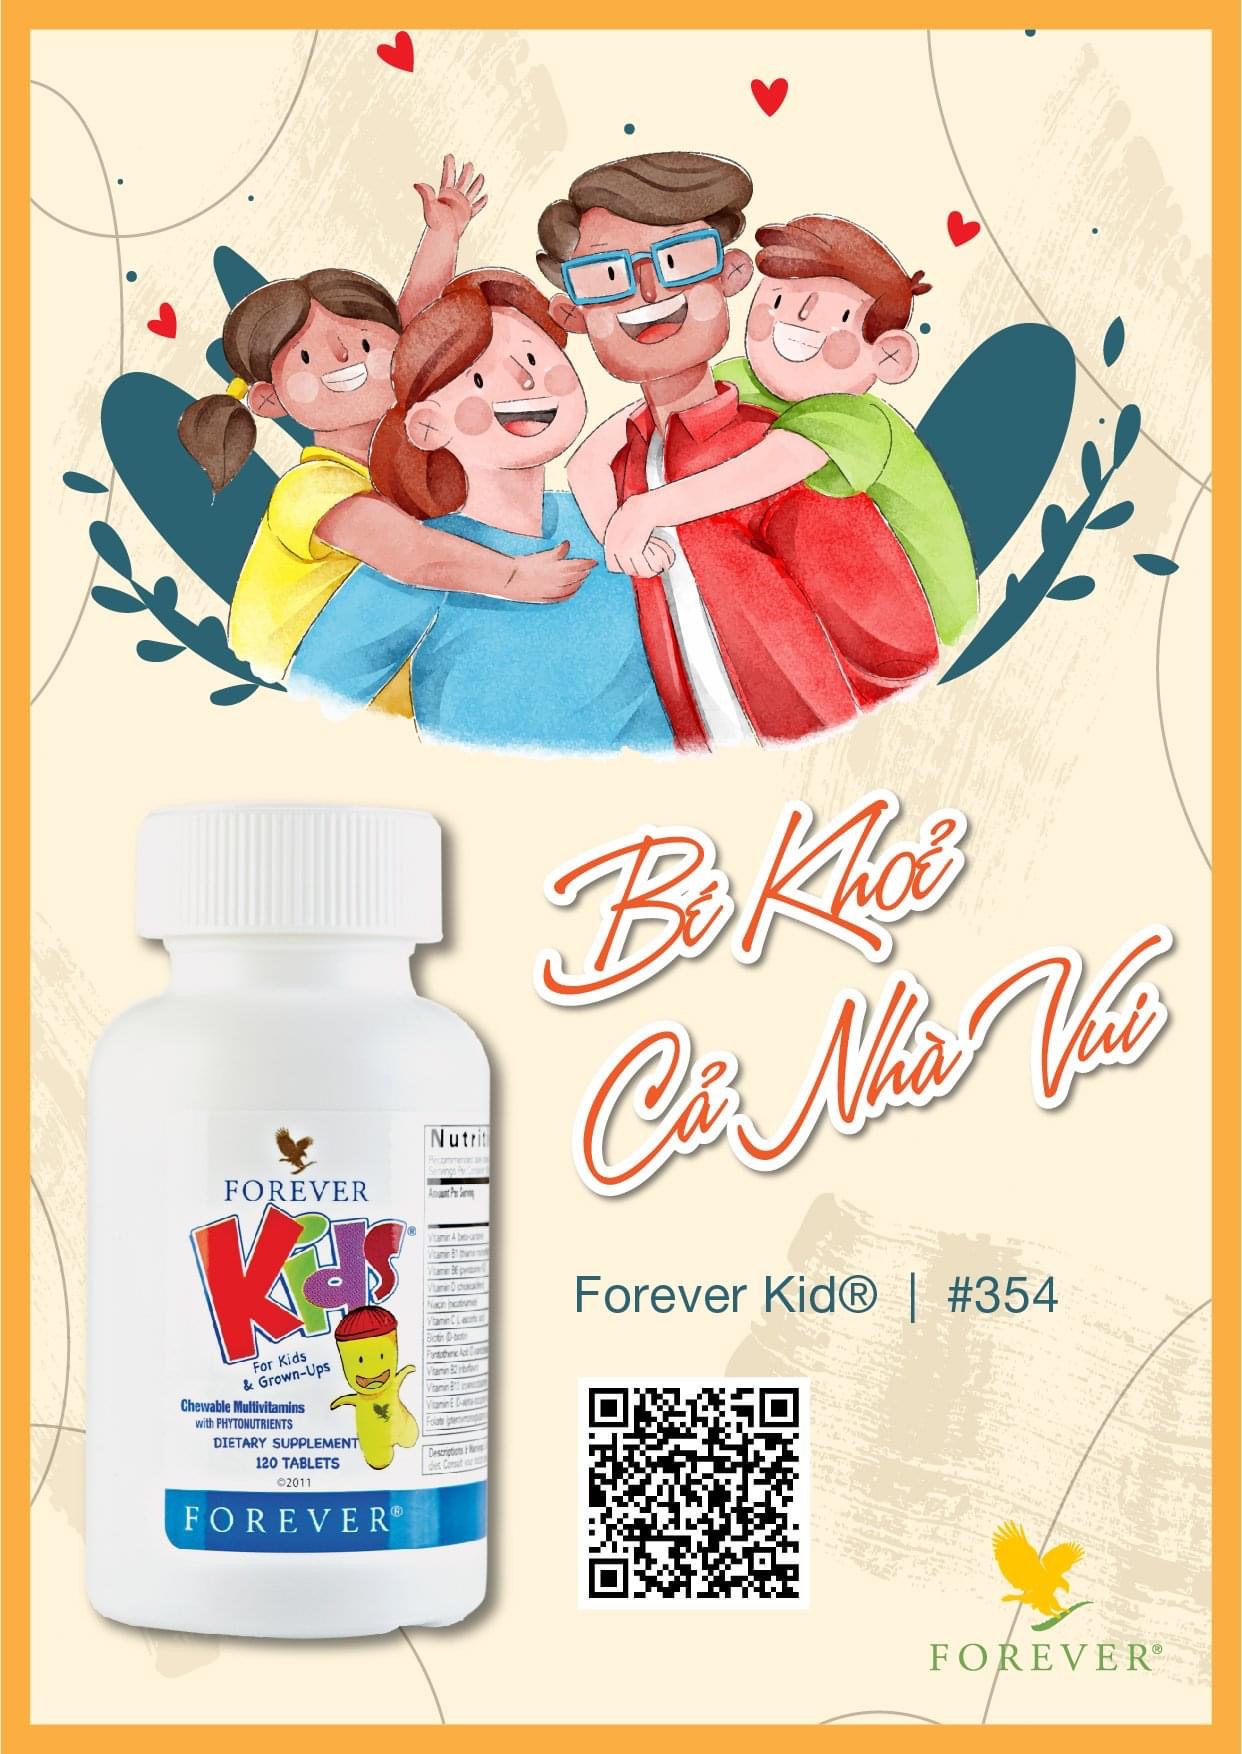 Forever Kids 354 Flp : Bé Khoẻ Cả Nhà Vu